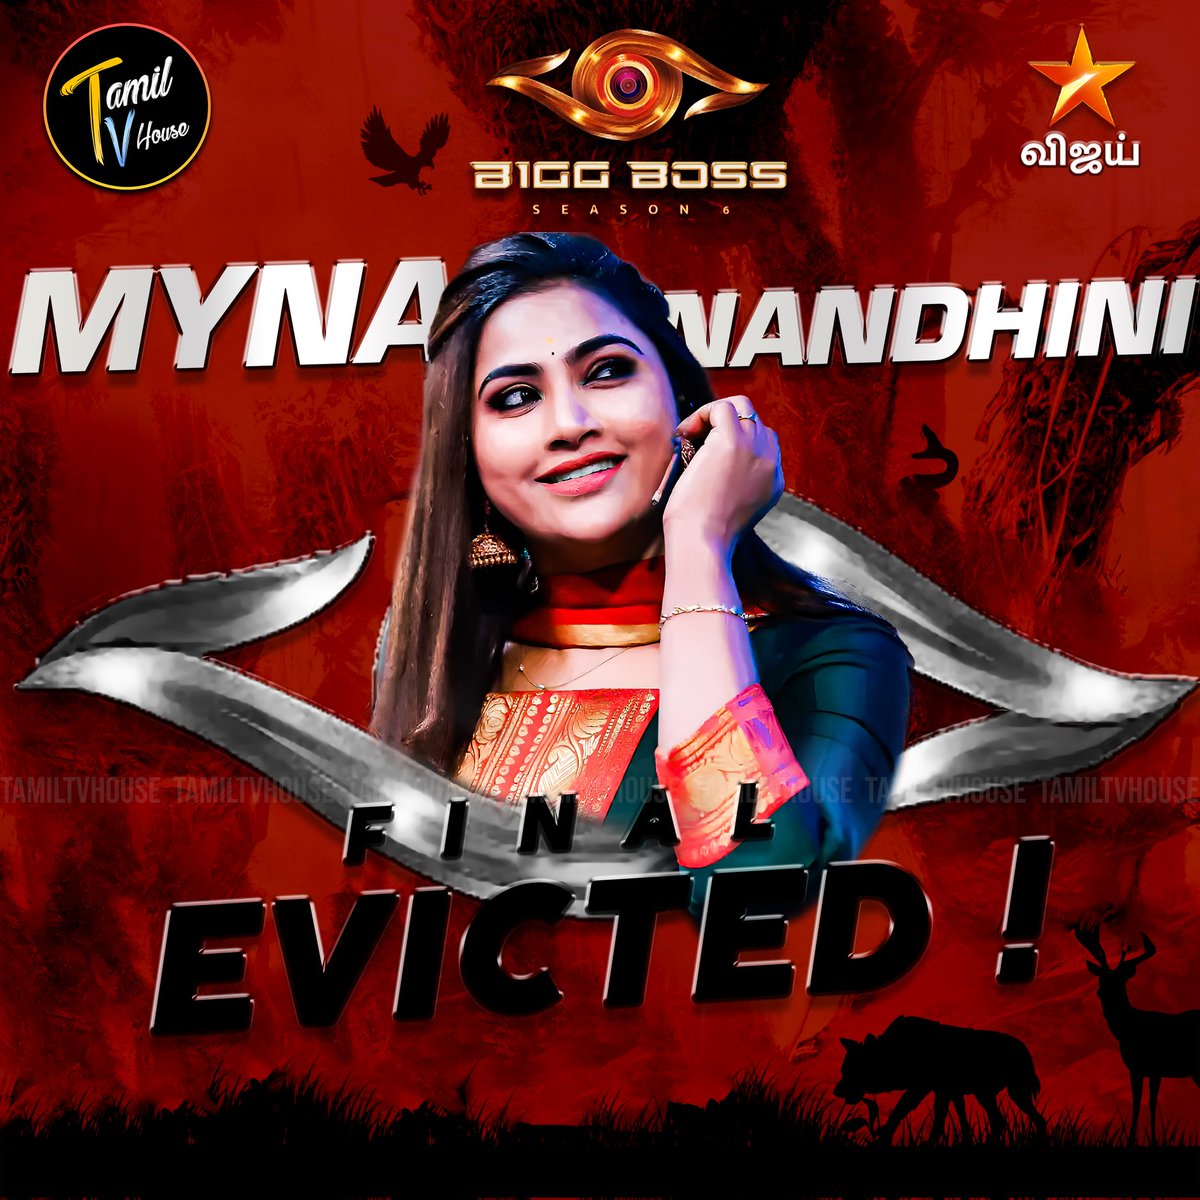 #MynaNandhini evicted on finalist !
#BiggBossTamil6 #BiggBossTamil

#SAISANGO #TAMILTVHouse #VijayTelevision